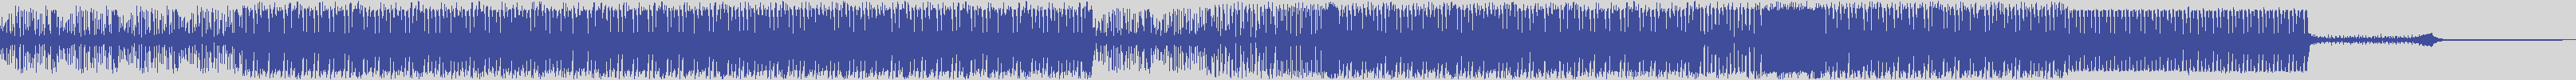 nf_boyz_records [NFY056] Dj Kay - Quizzy [Original Mix] audio wave form